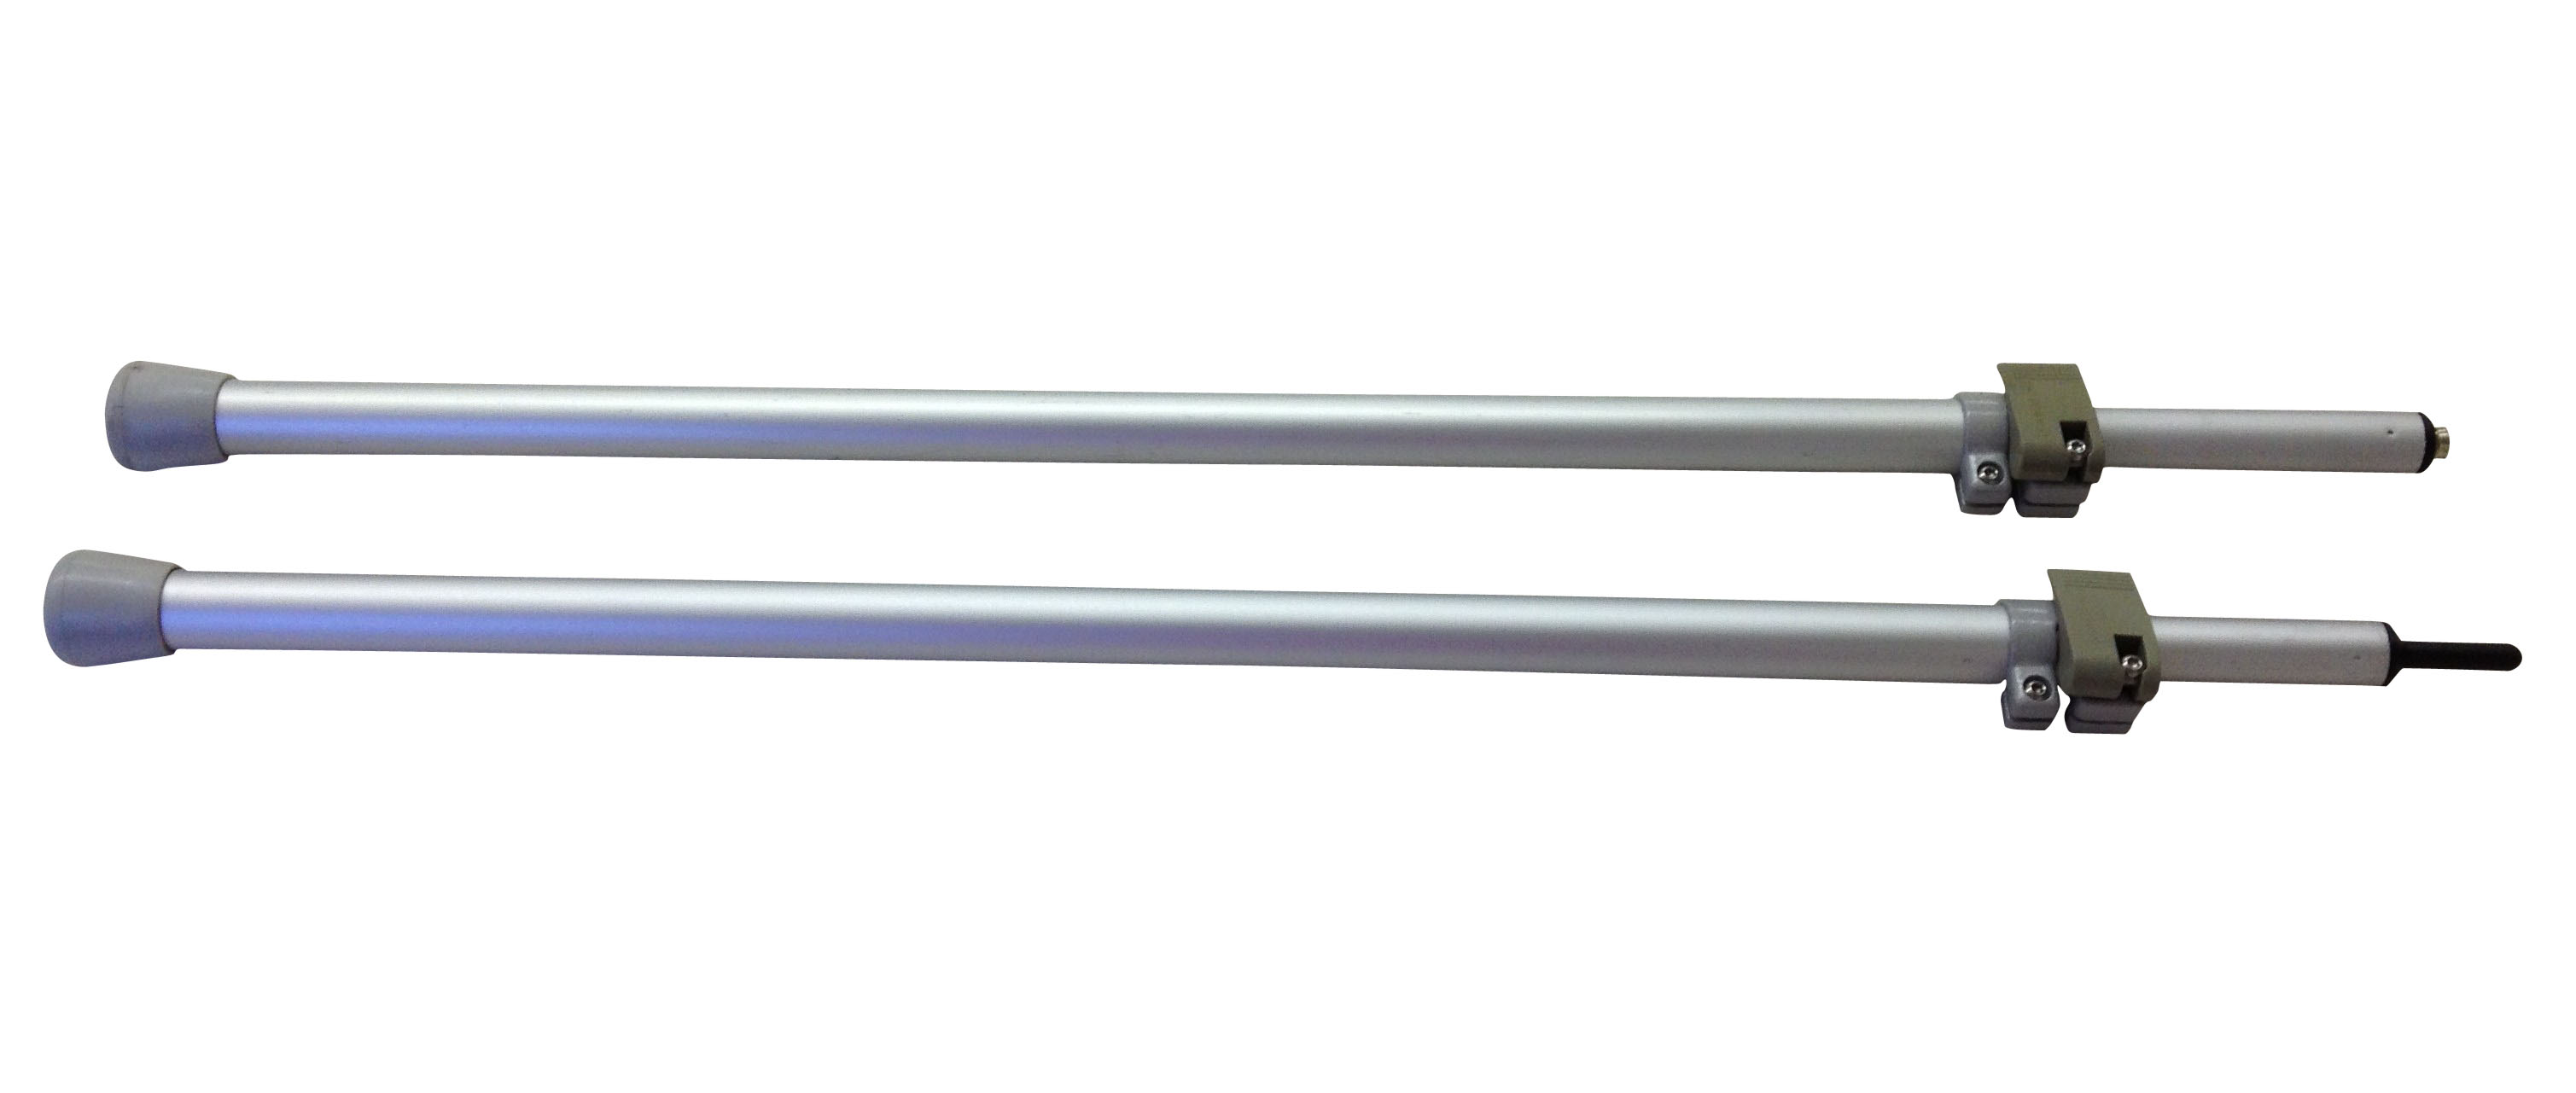 Adjustable Cam Lock Support Pole